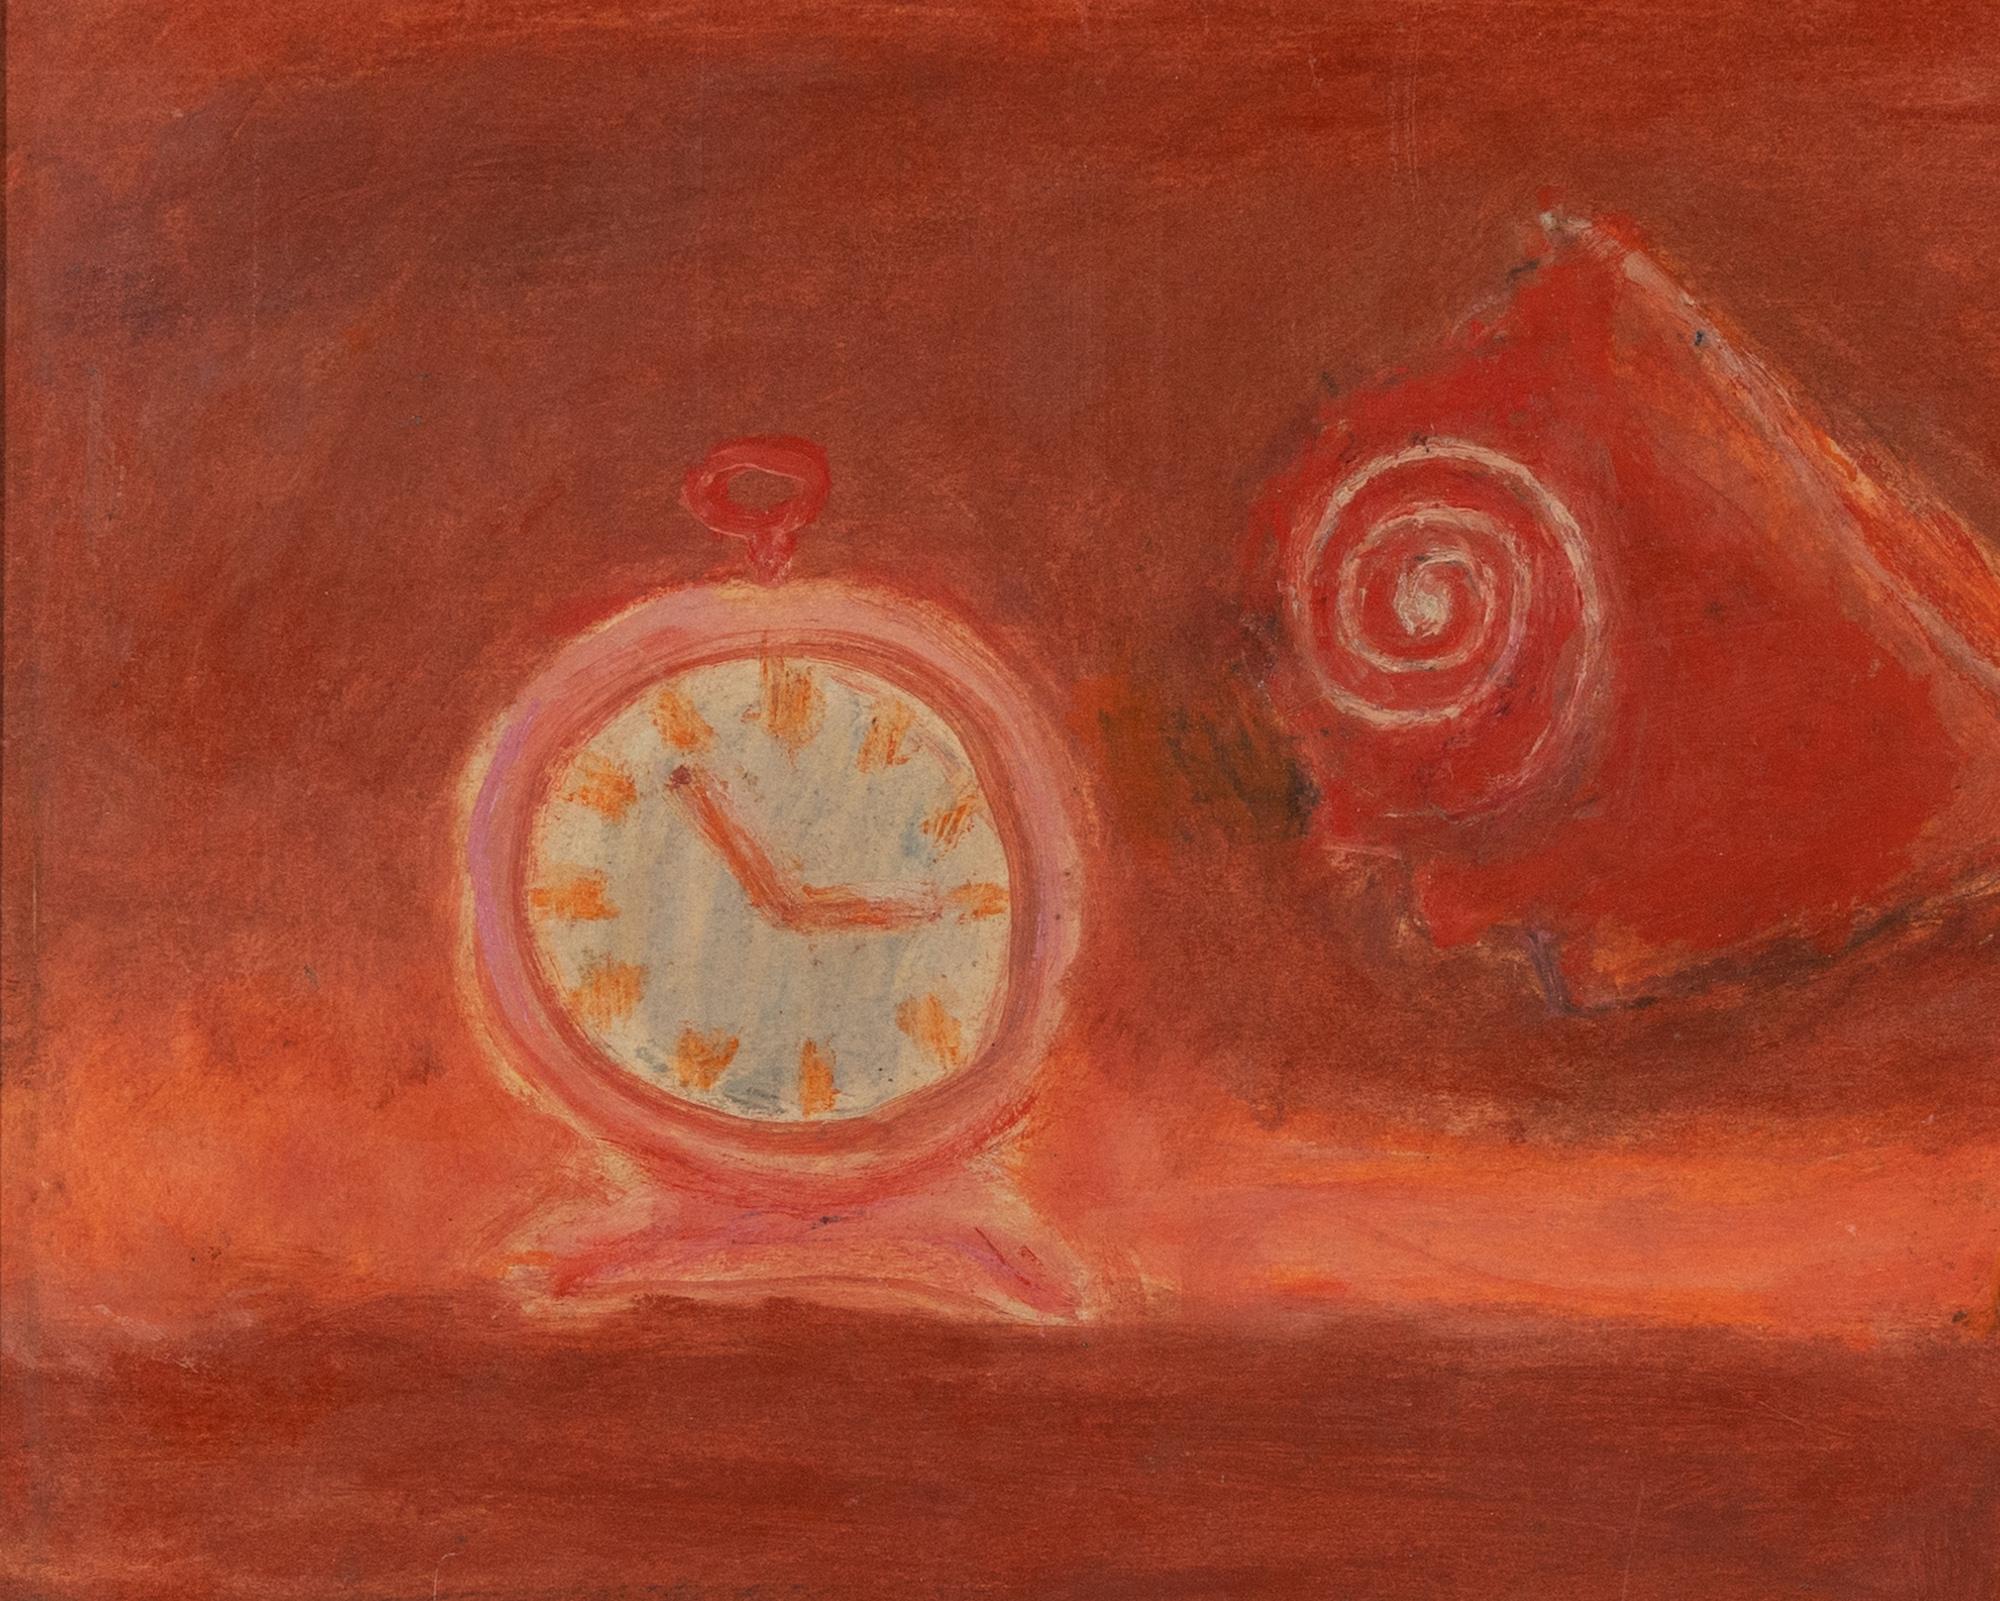 Coquillage et réveil en rouge by Henri Hayden - Still Life Painting For Sale 1